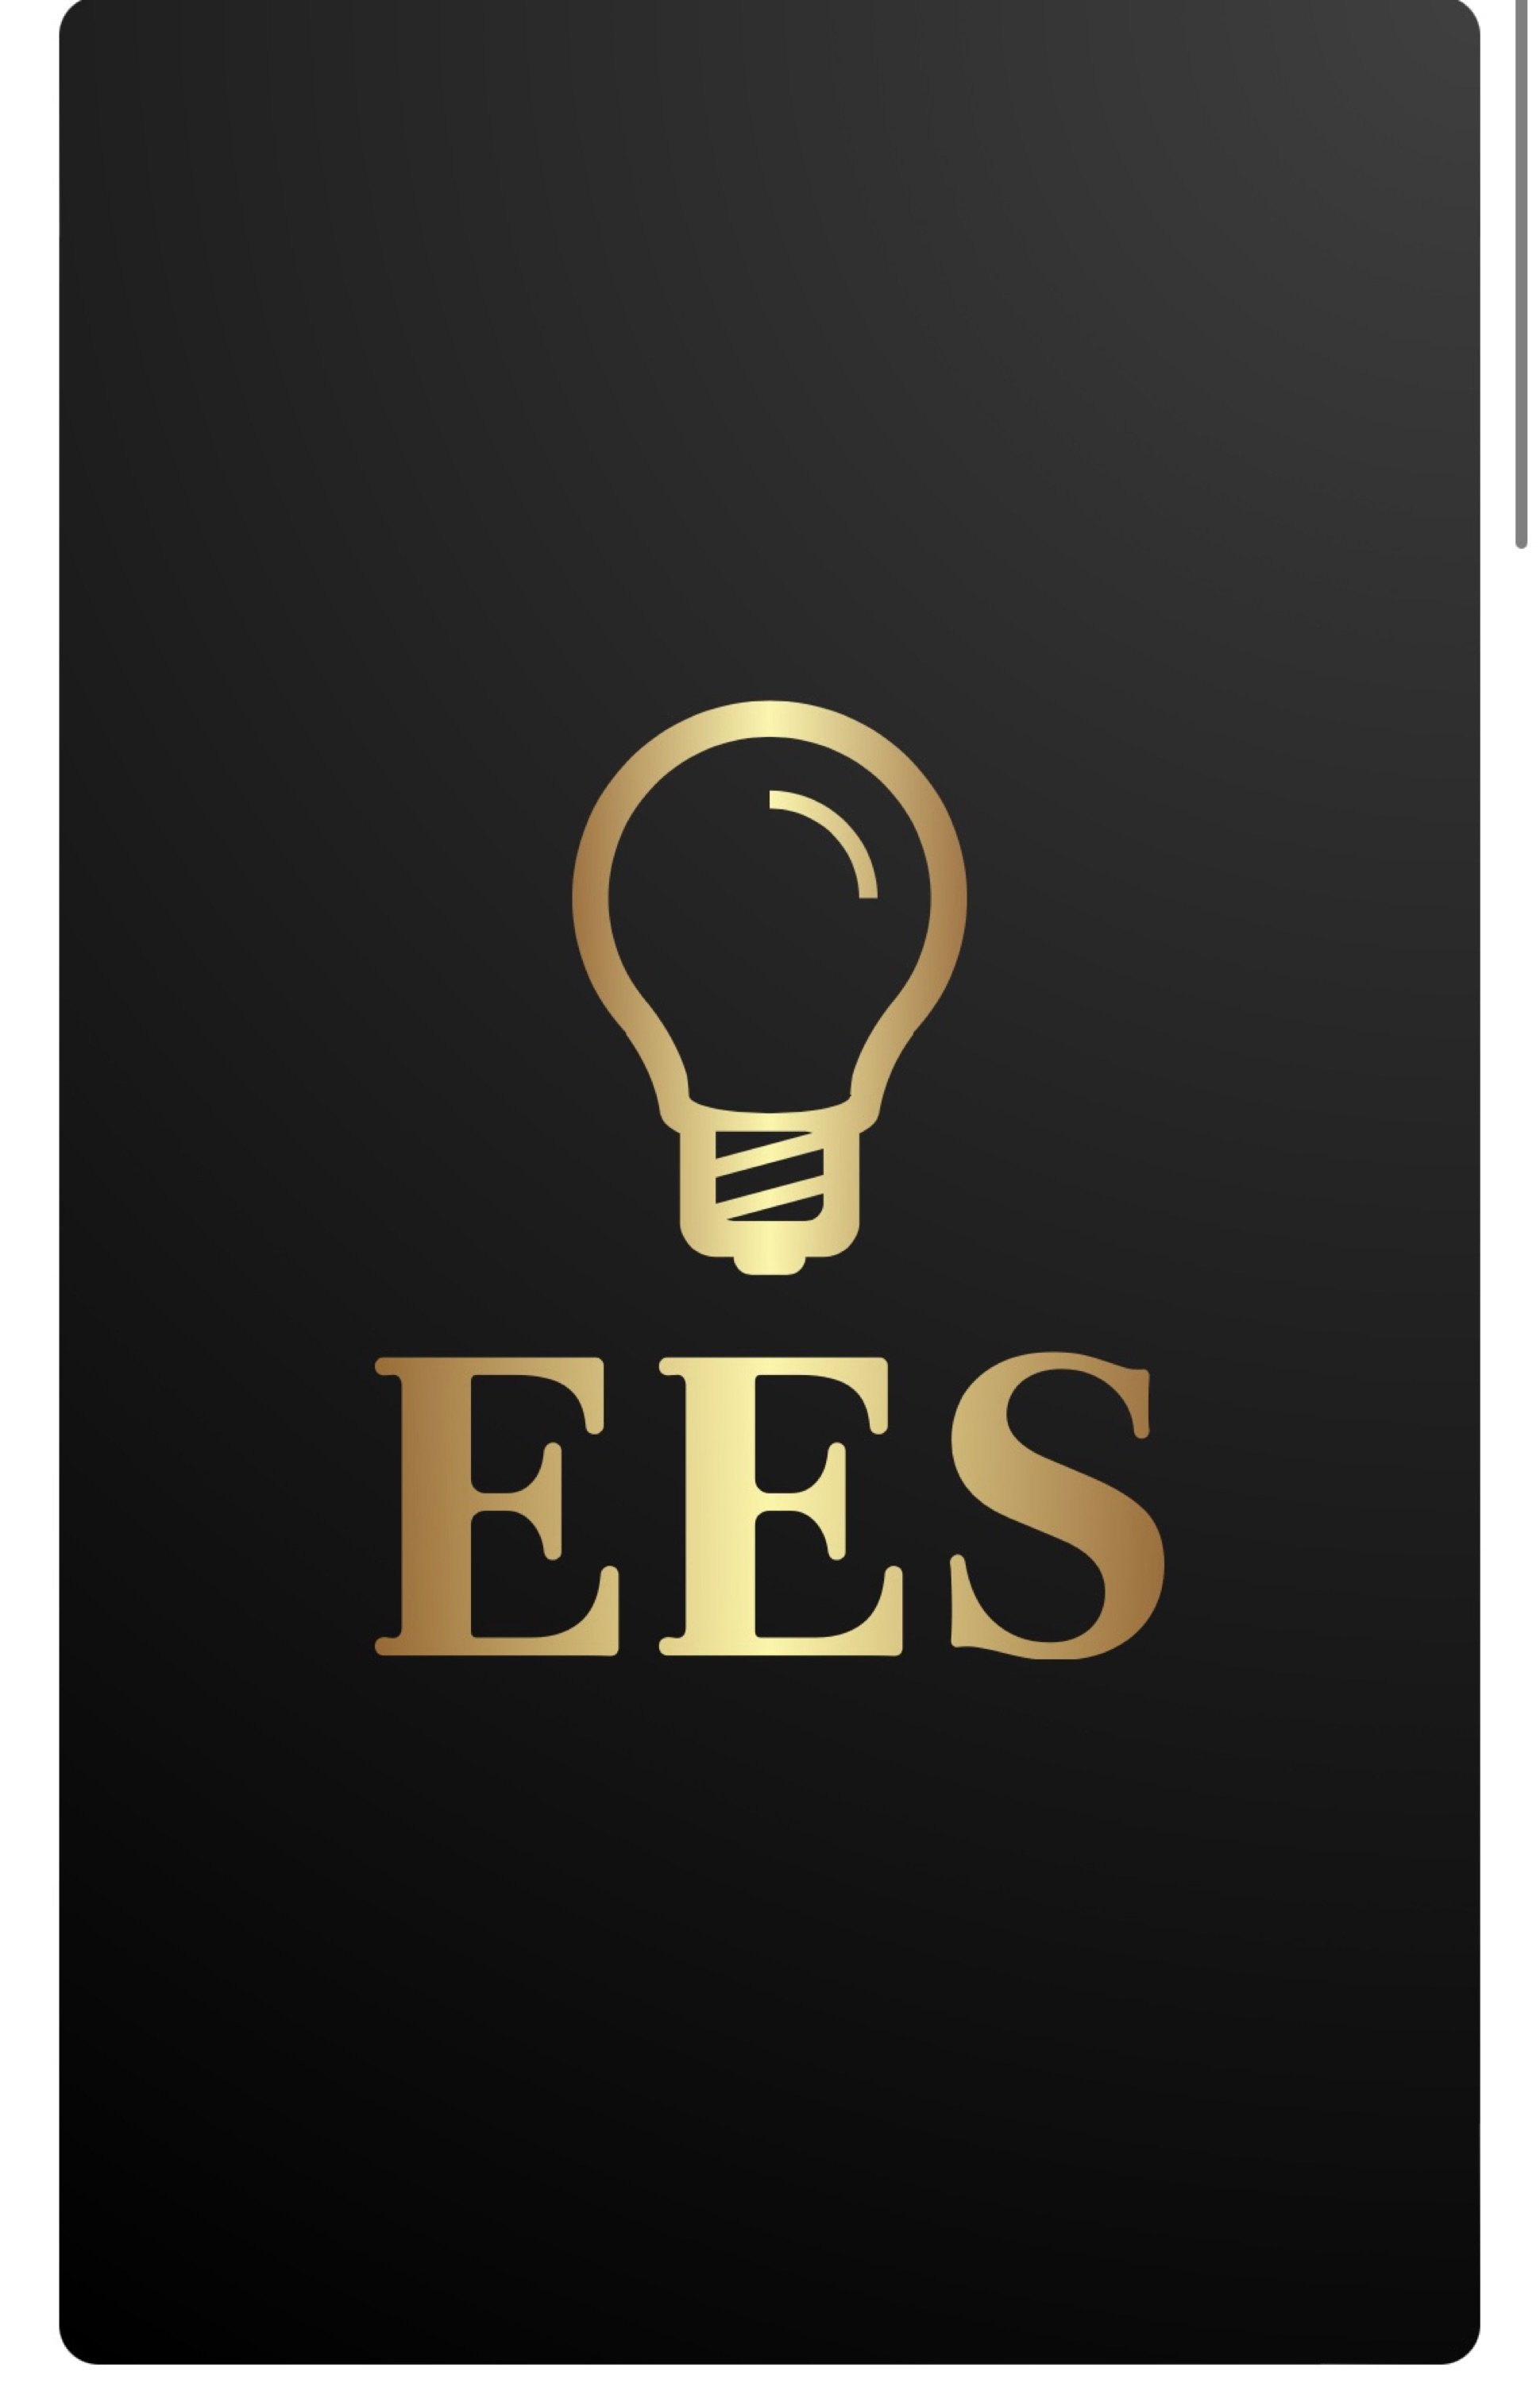 Ellis Electrical Services Logo